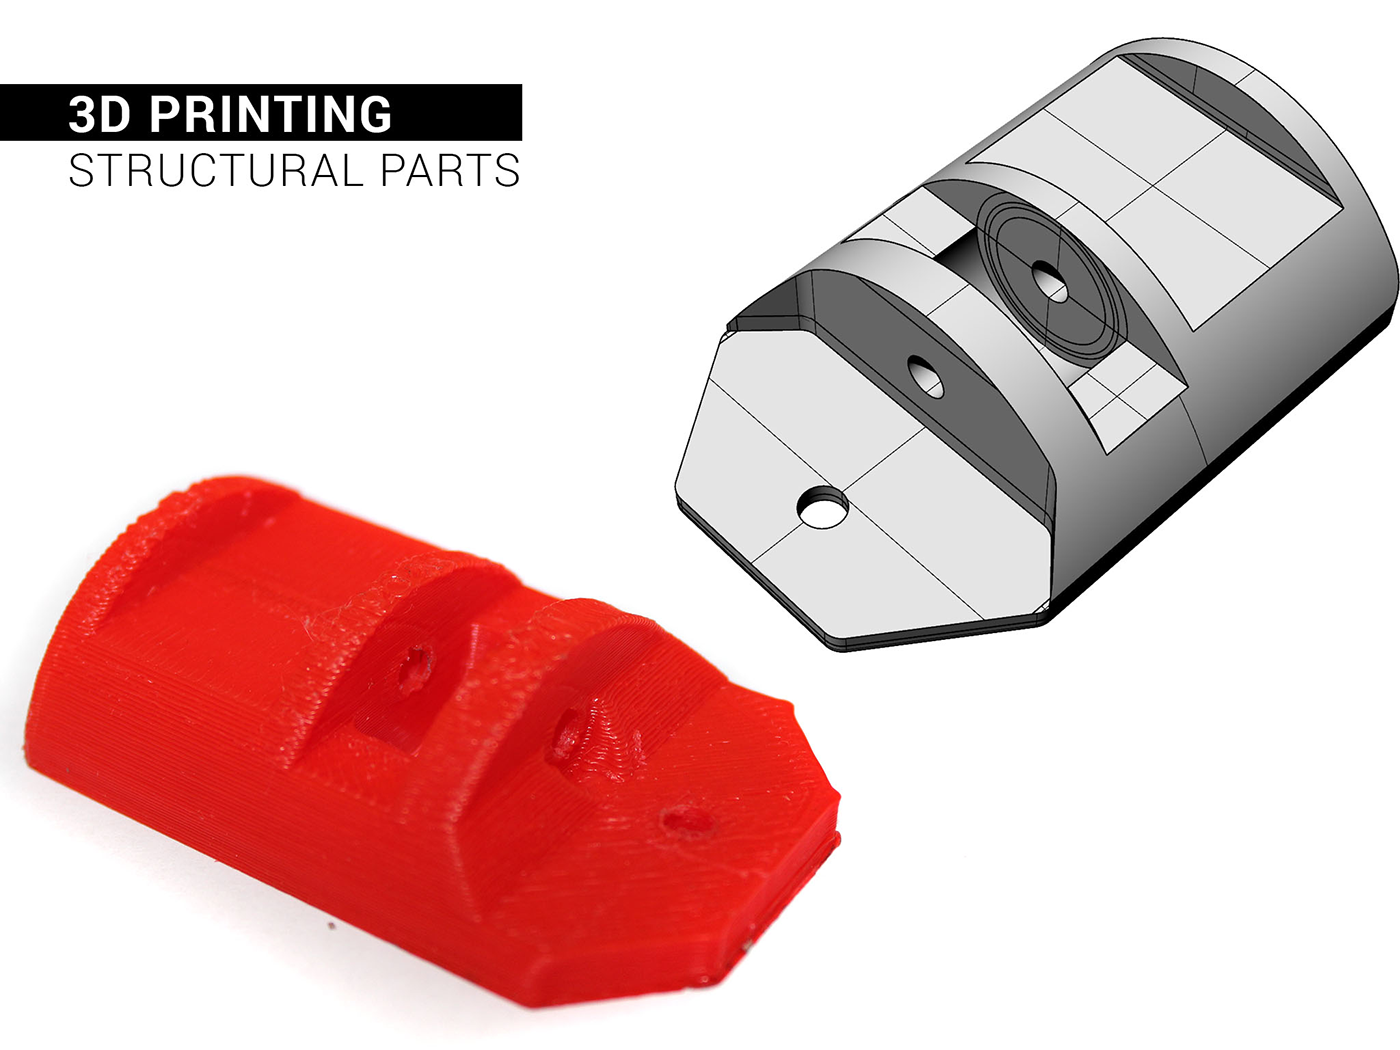 design 3D 3D Printer Printing modeling model architecture